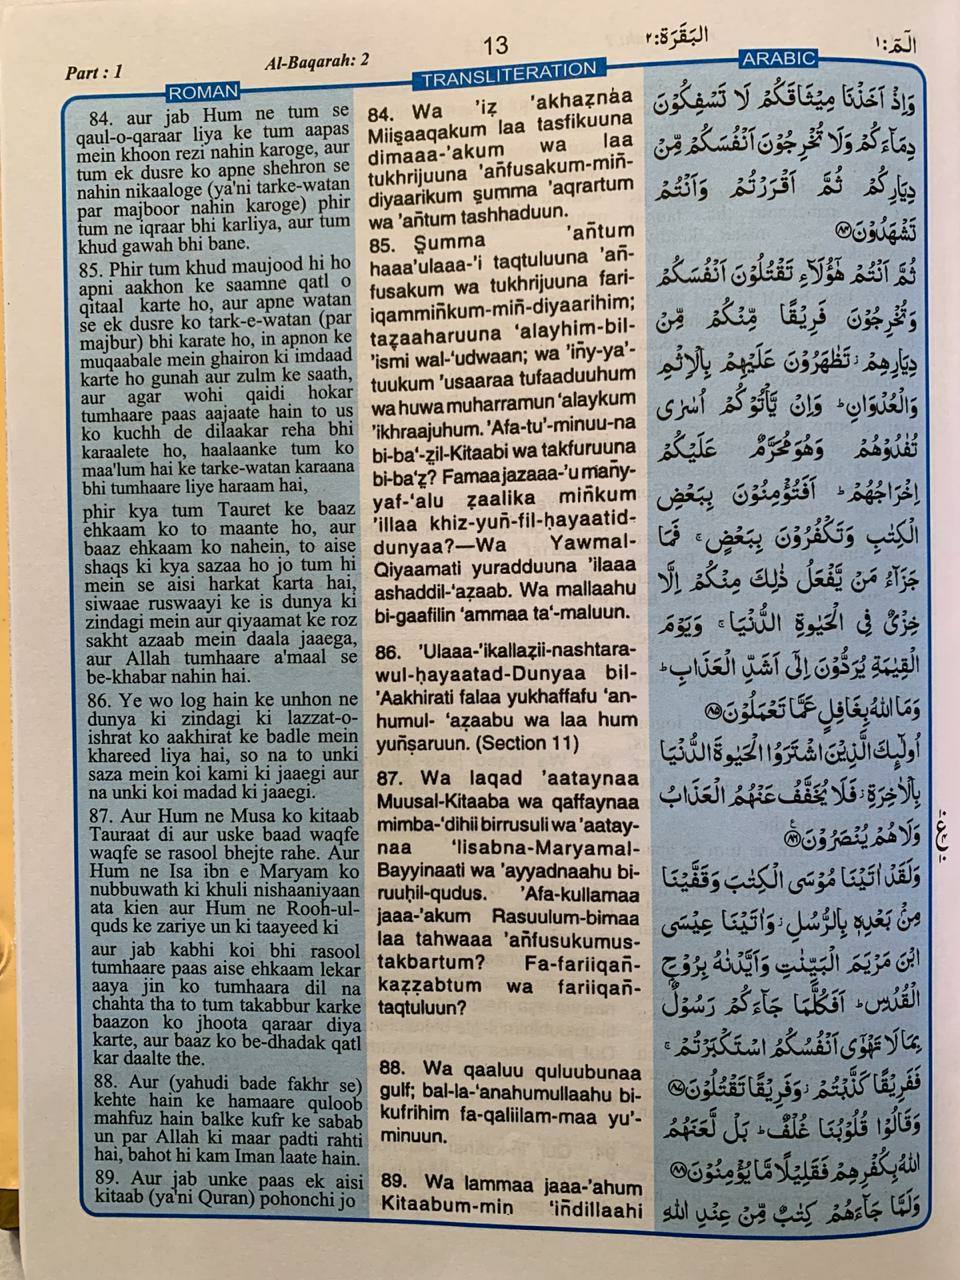 quran urdu translation in roman script